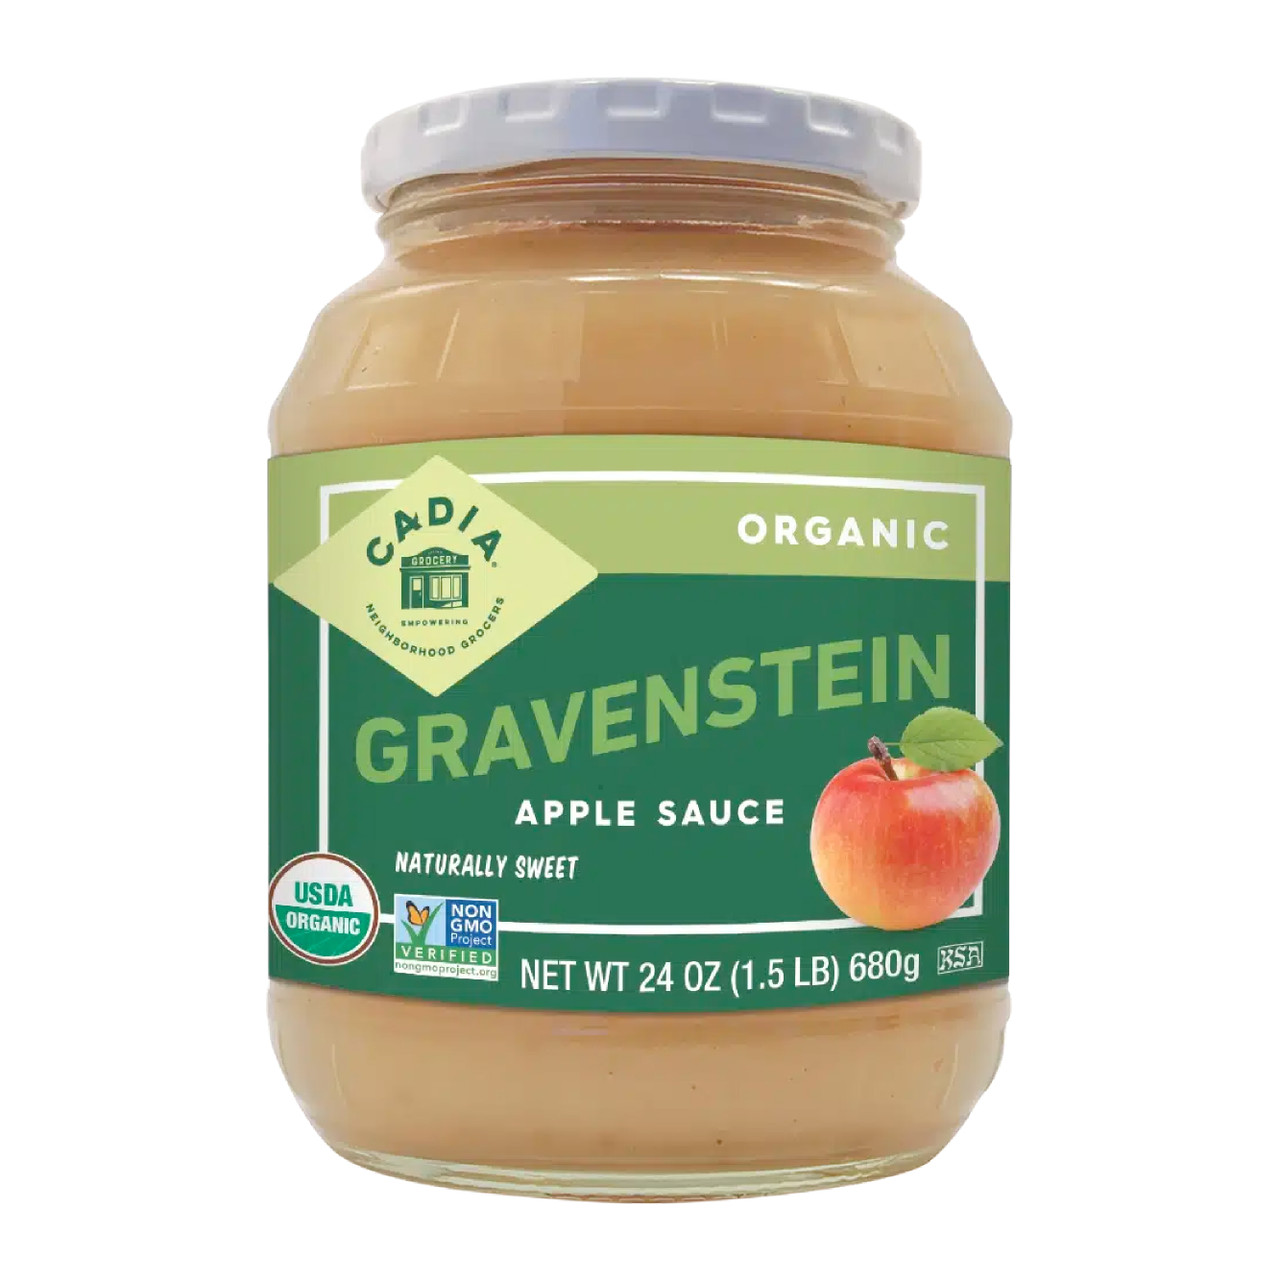 Cadia Gravenstein Apple Sauce Organic